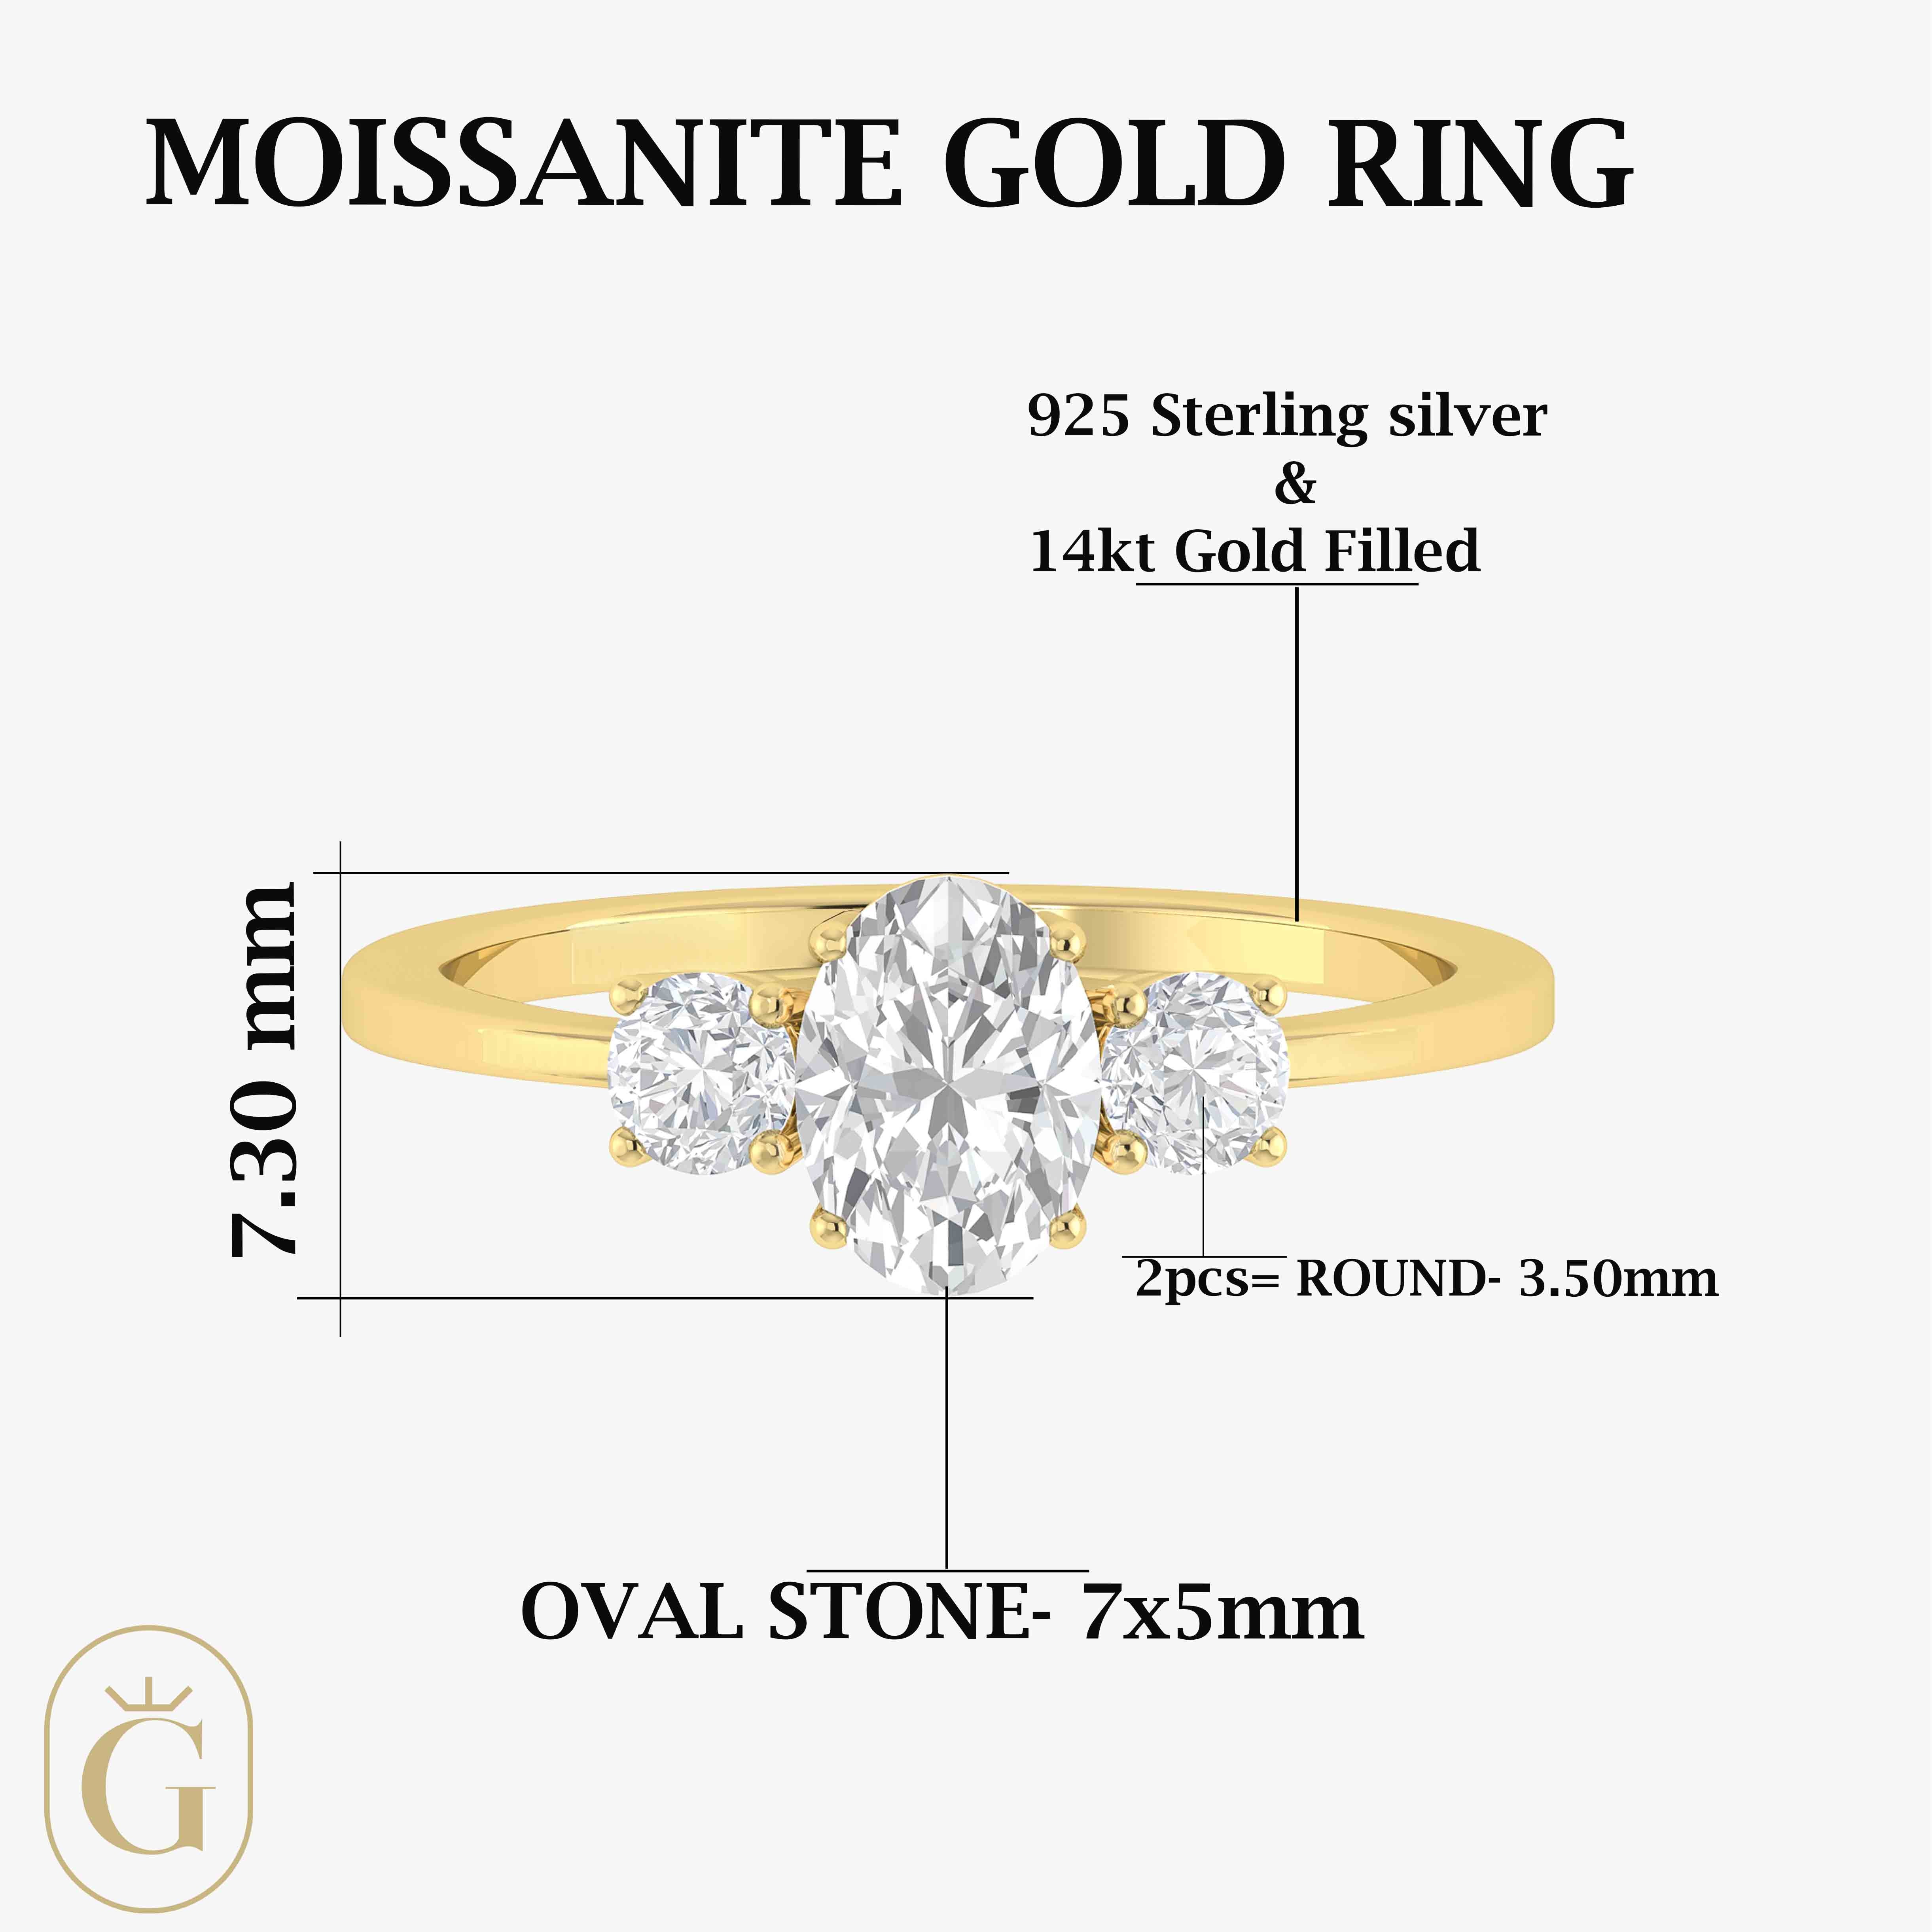 Genuine Moissanite Gemstone Ring